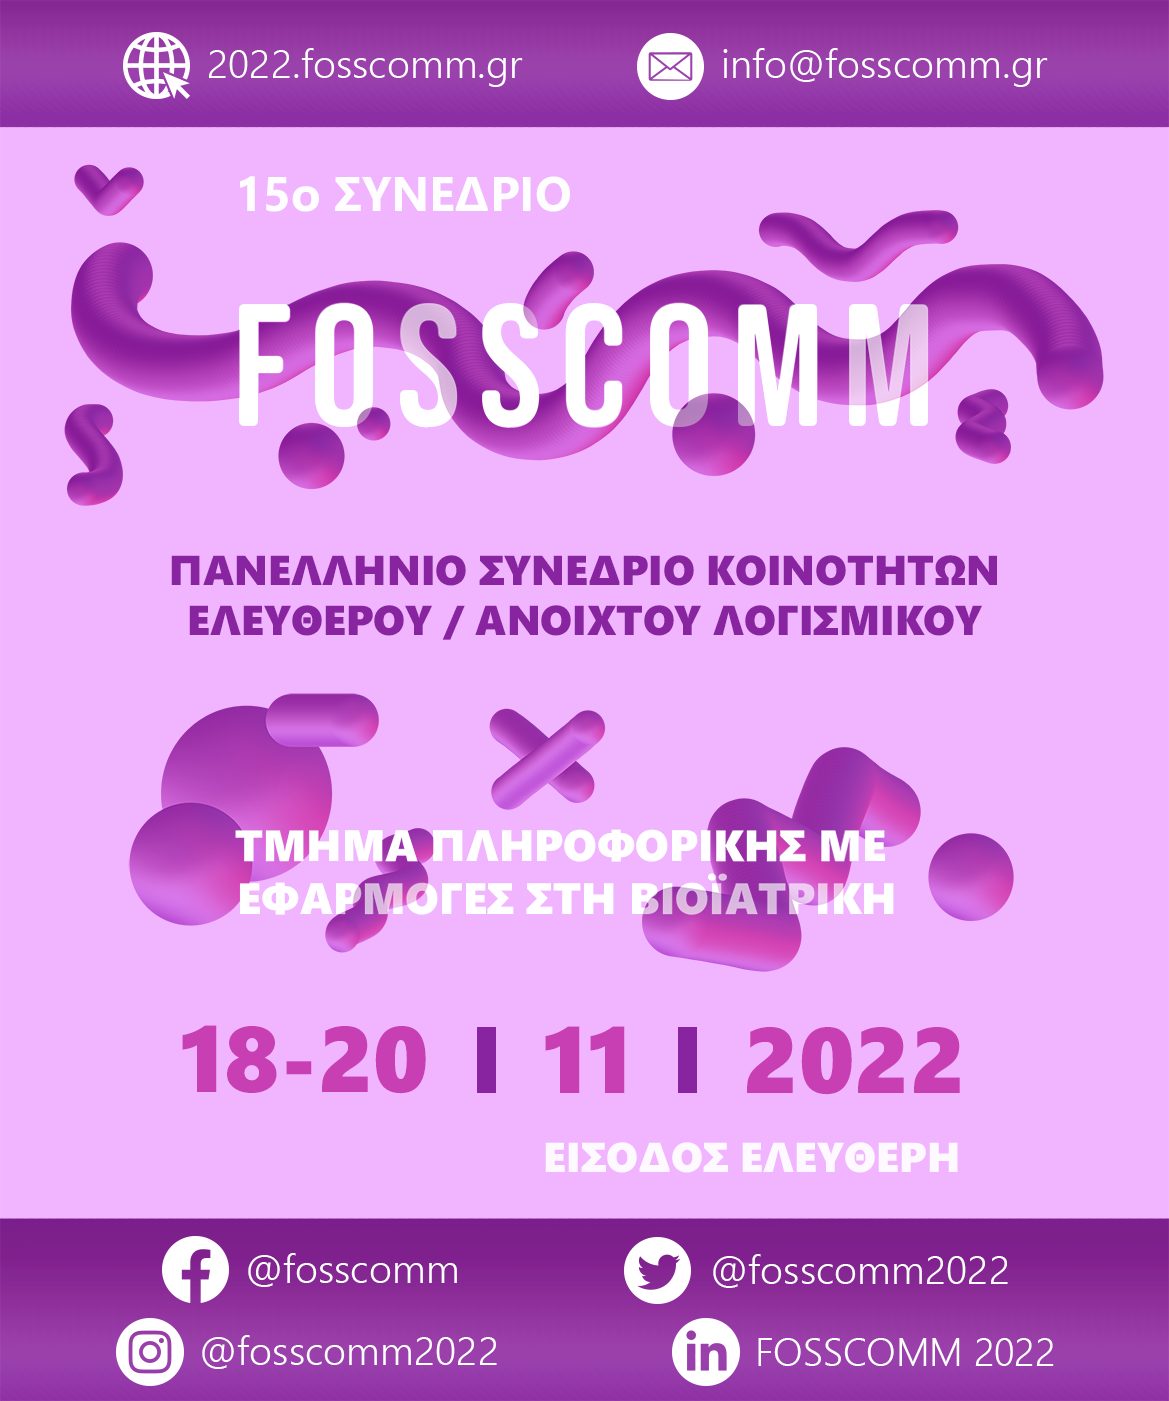 fosscomm 2022 poster